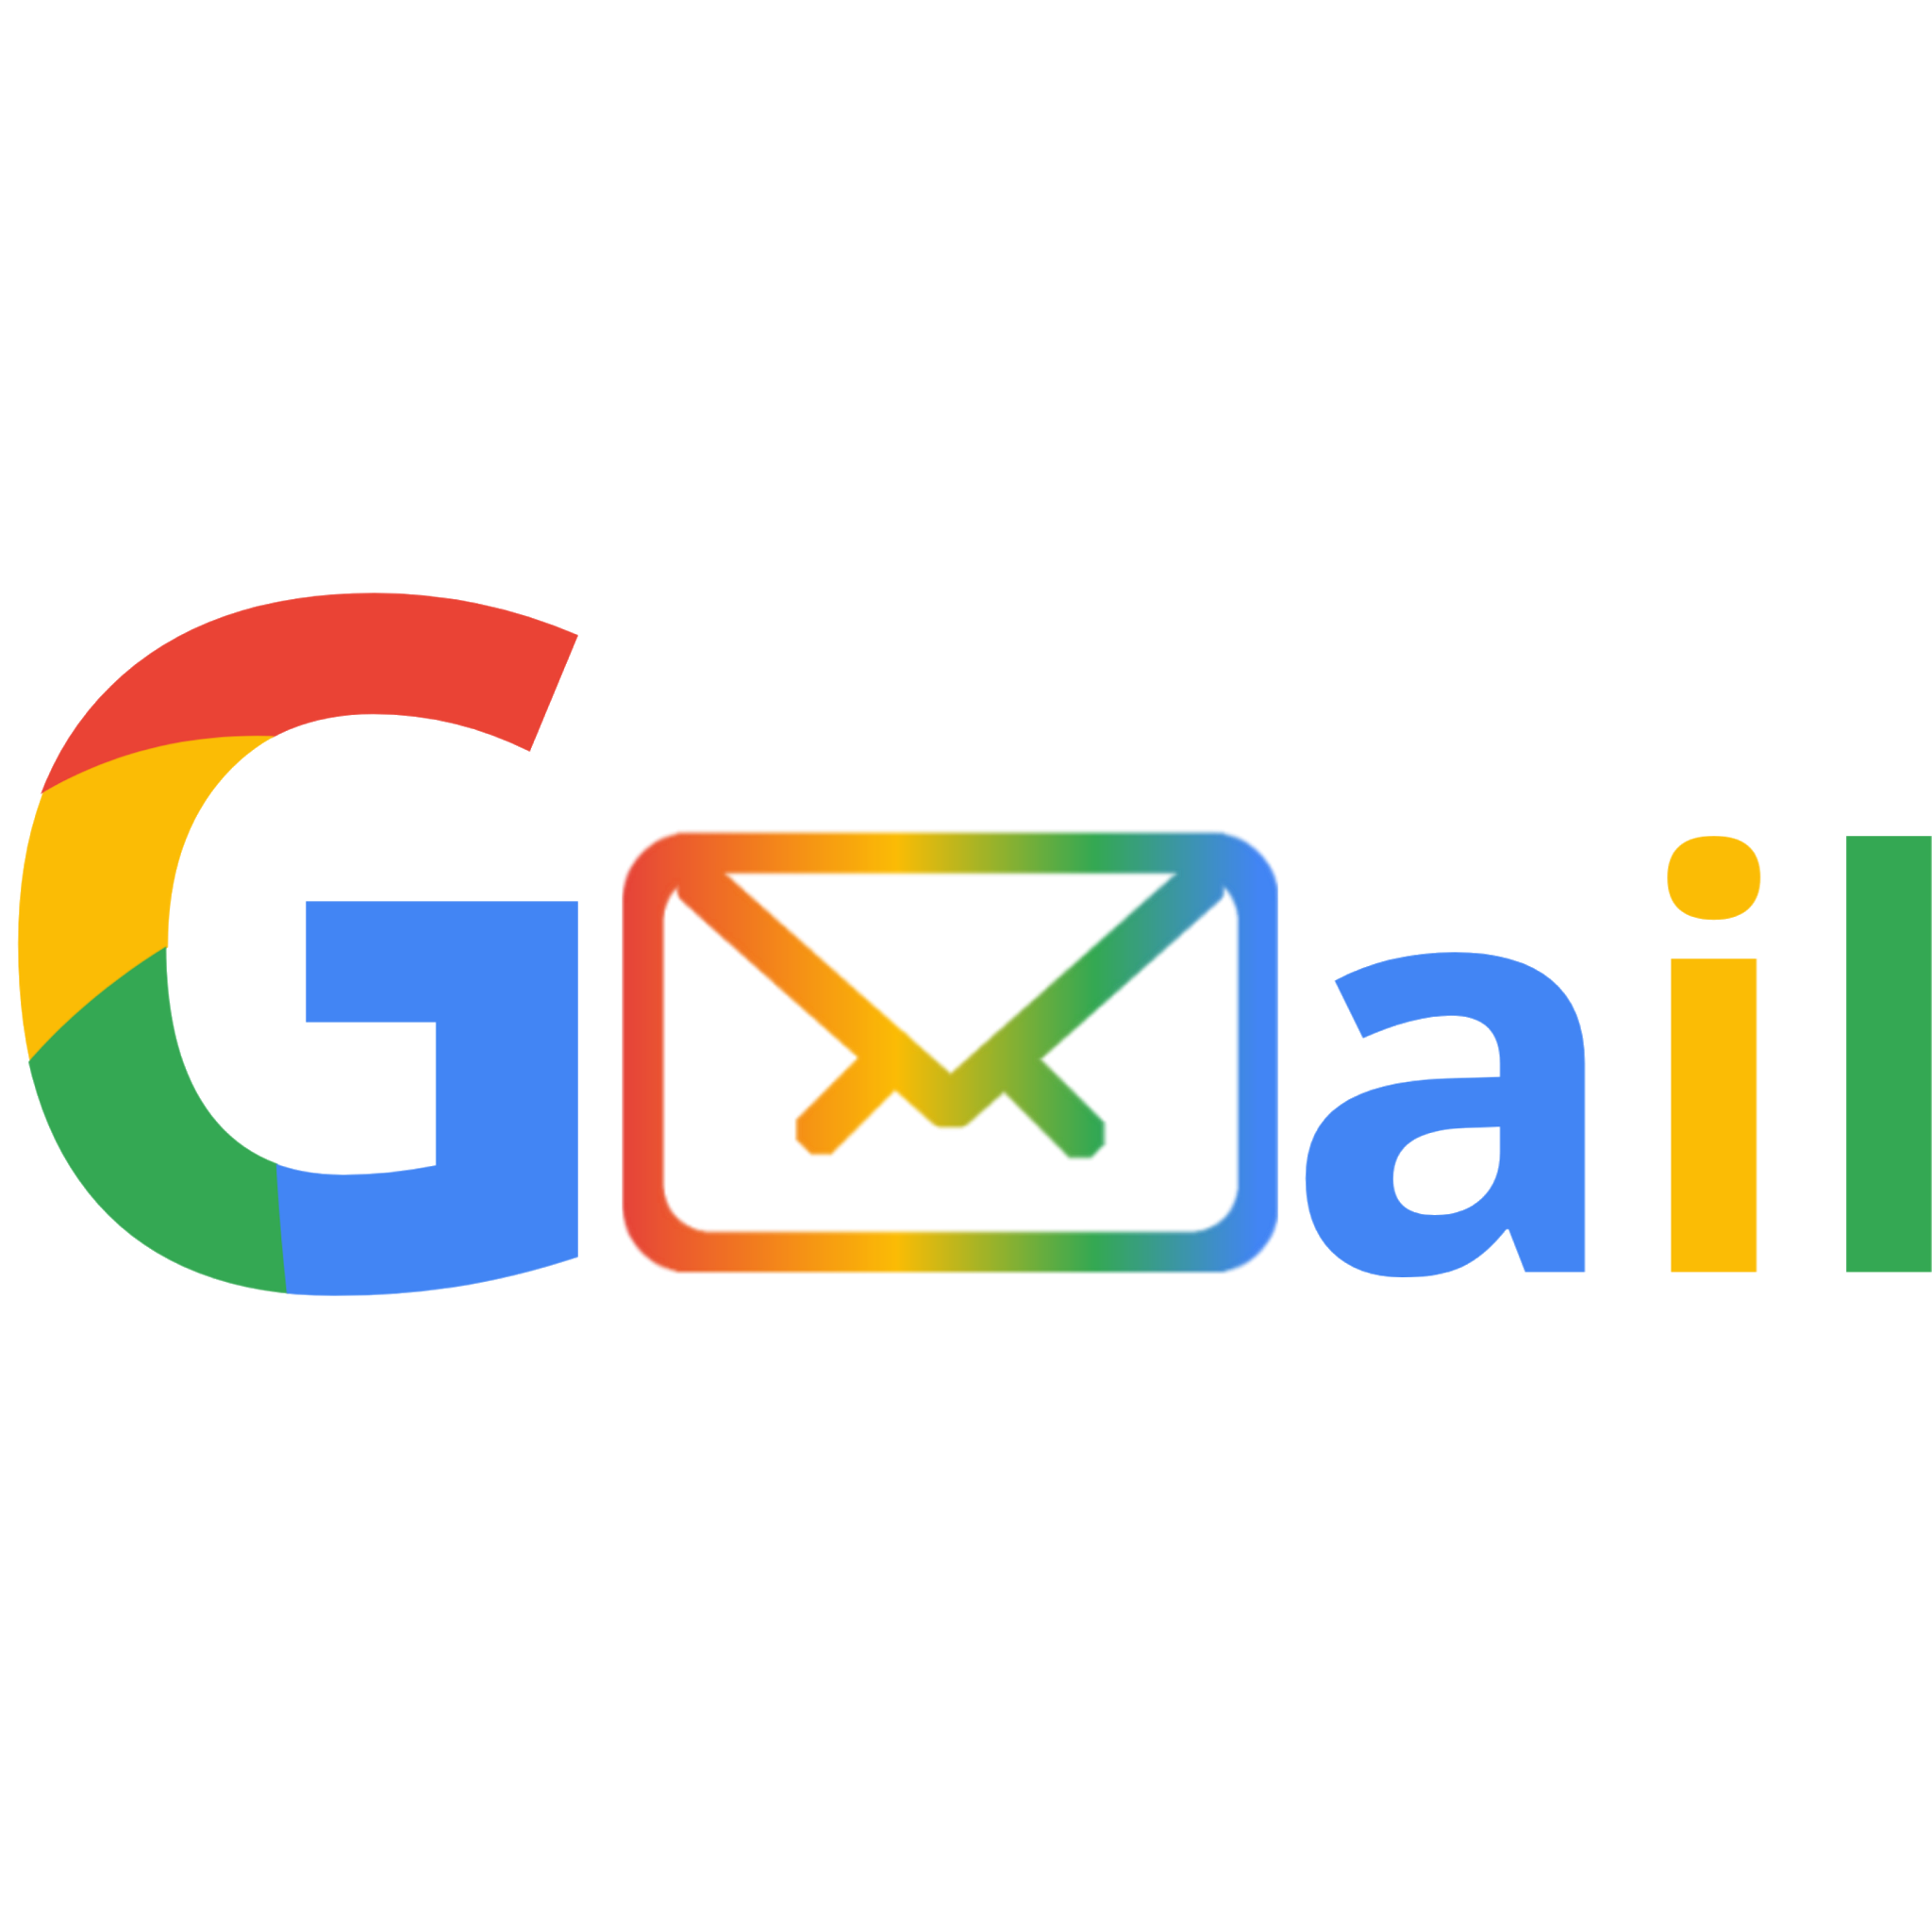 Gmail logo redesign